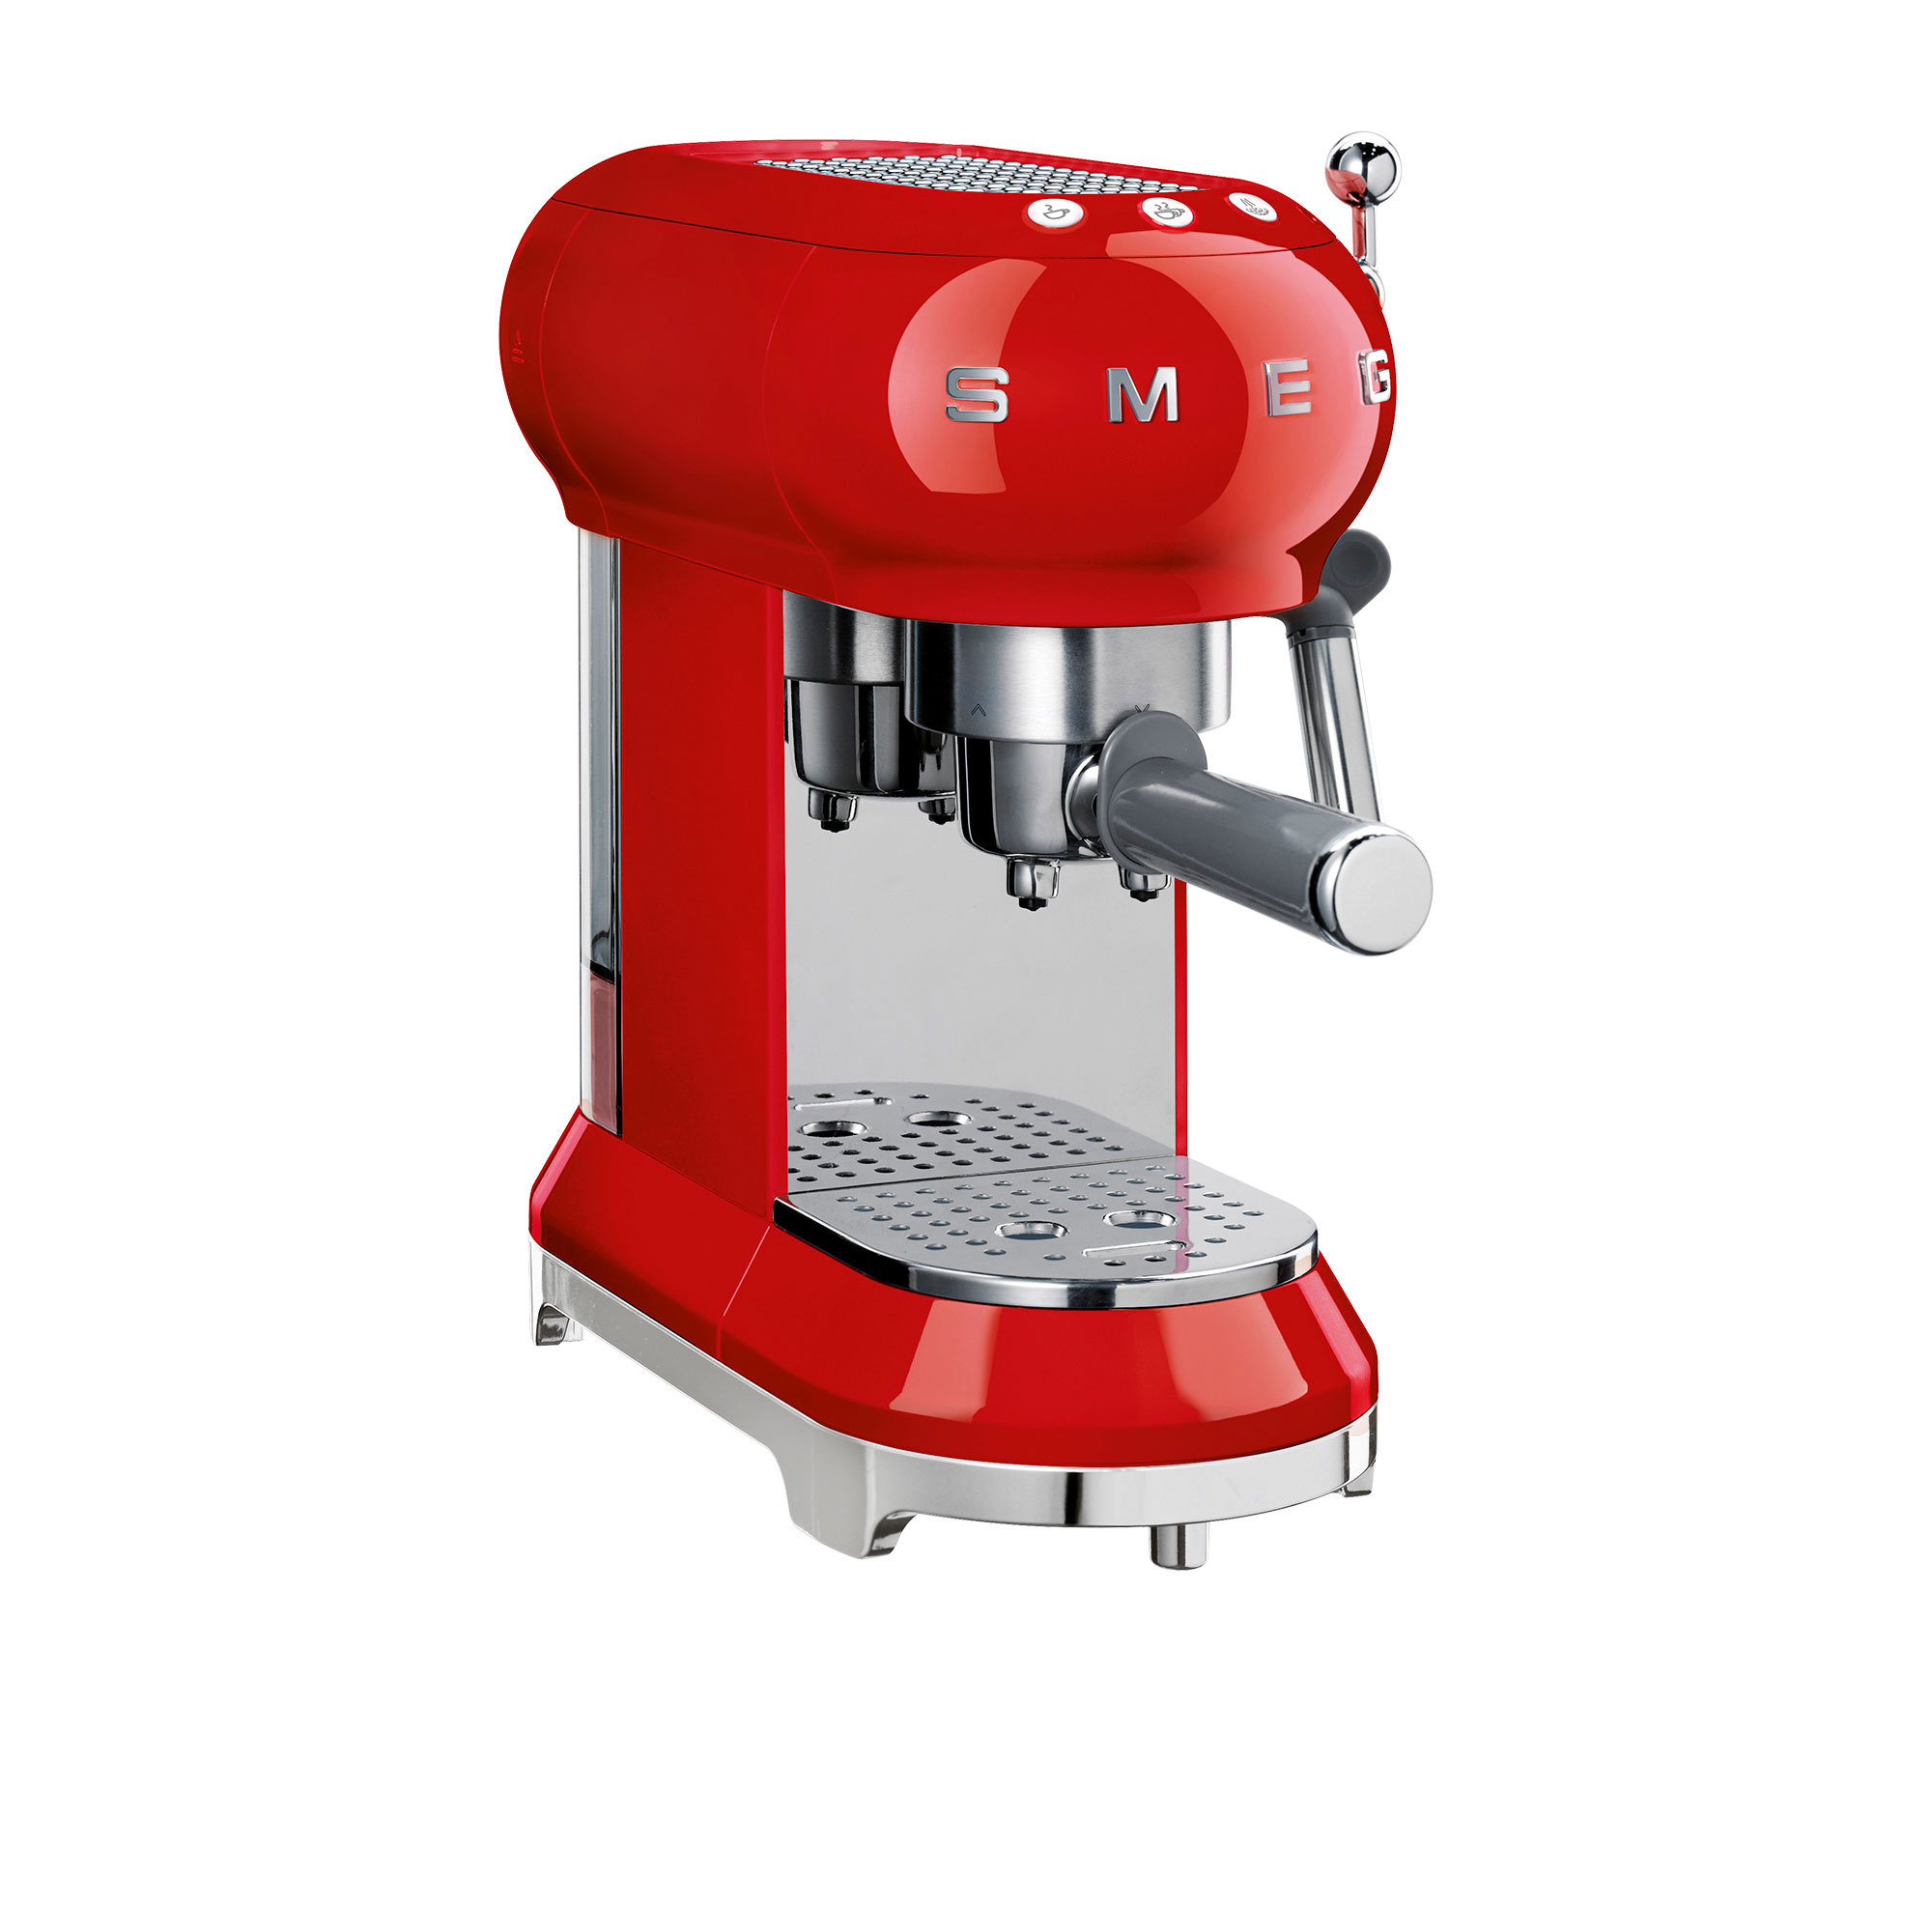 Smeg 50's Retro Style Espresso Coffee Machine Red Image 1